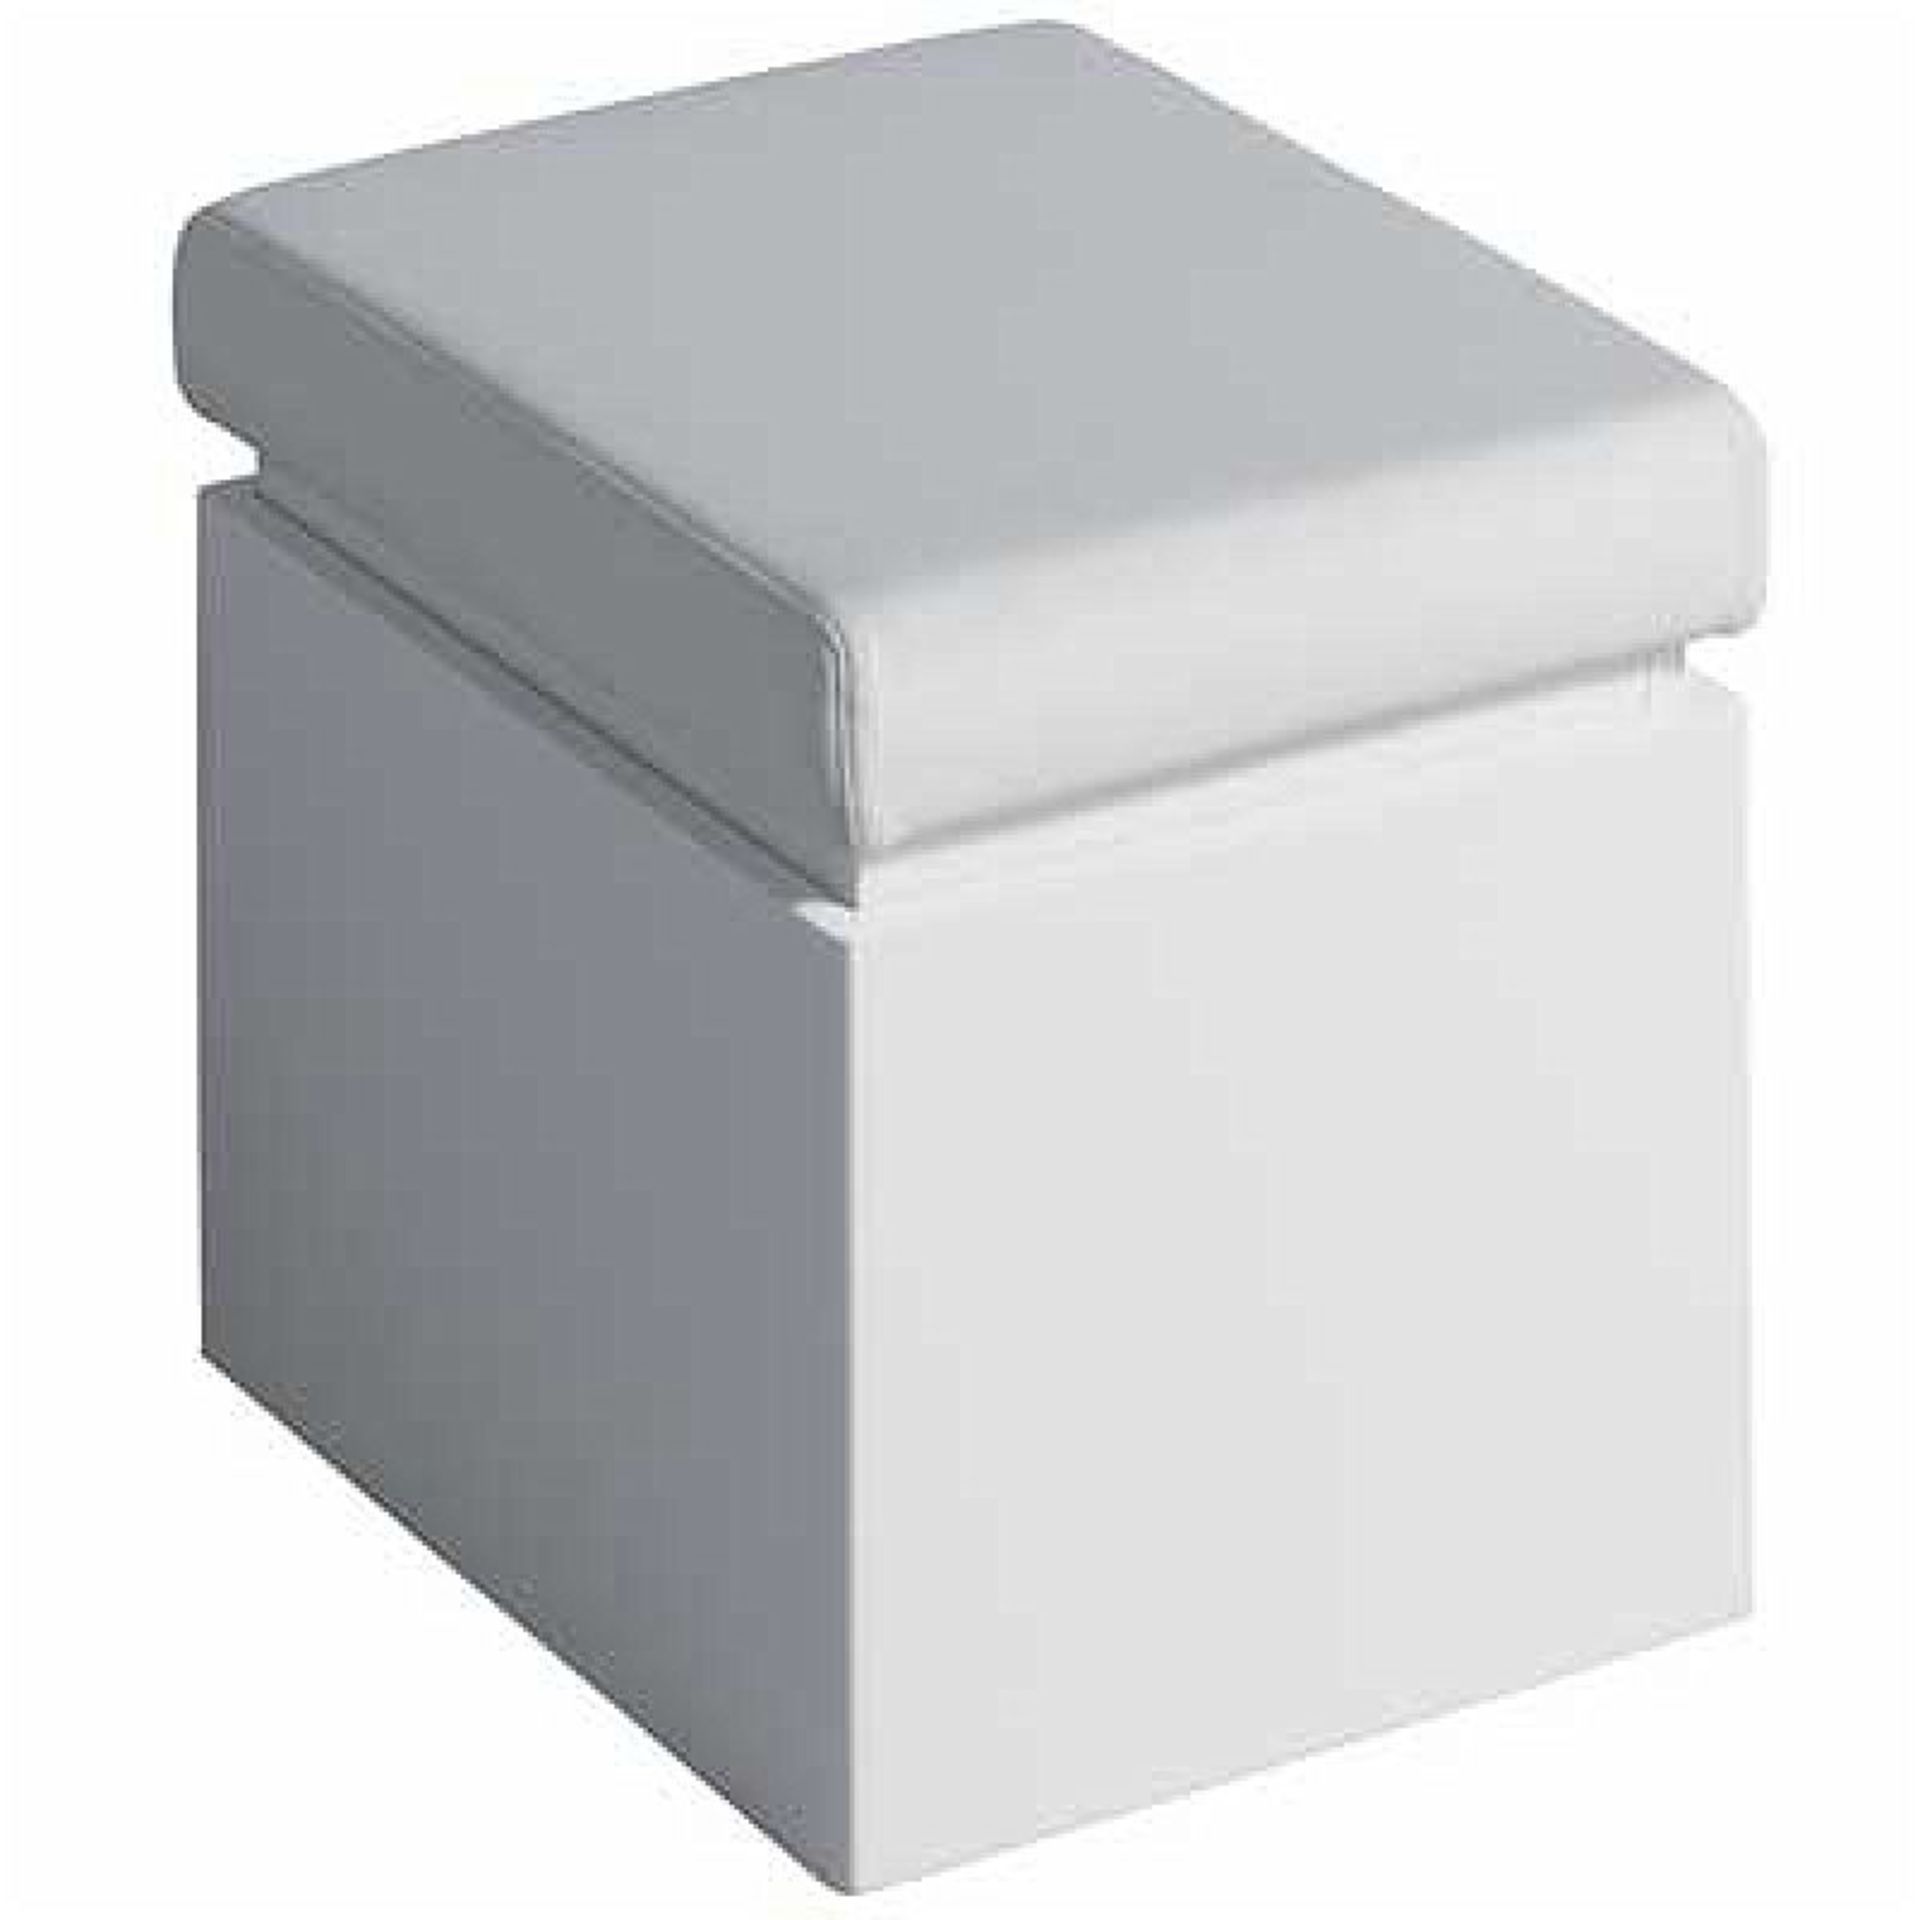 New Twyford White Bathroom Seat With Storage. RRP £254.99.Ta0901Wh. The Twyford White Bathro... - Image 2 of 2